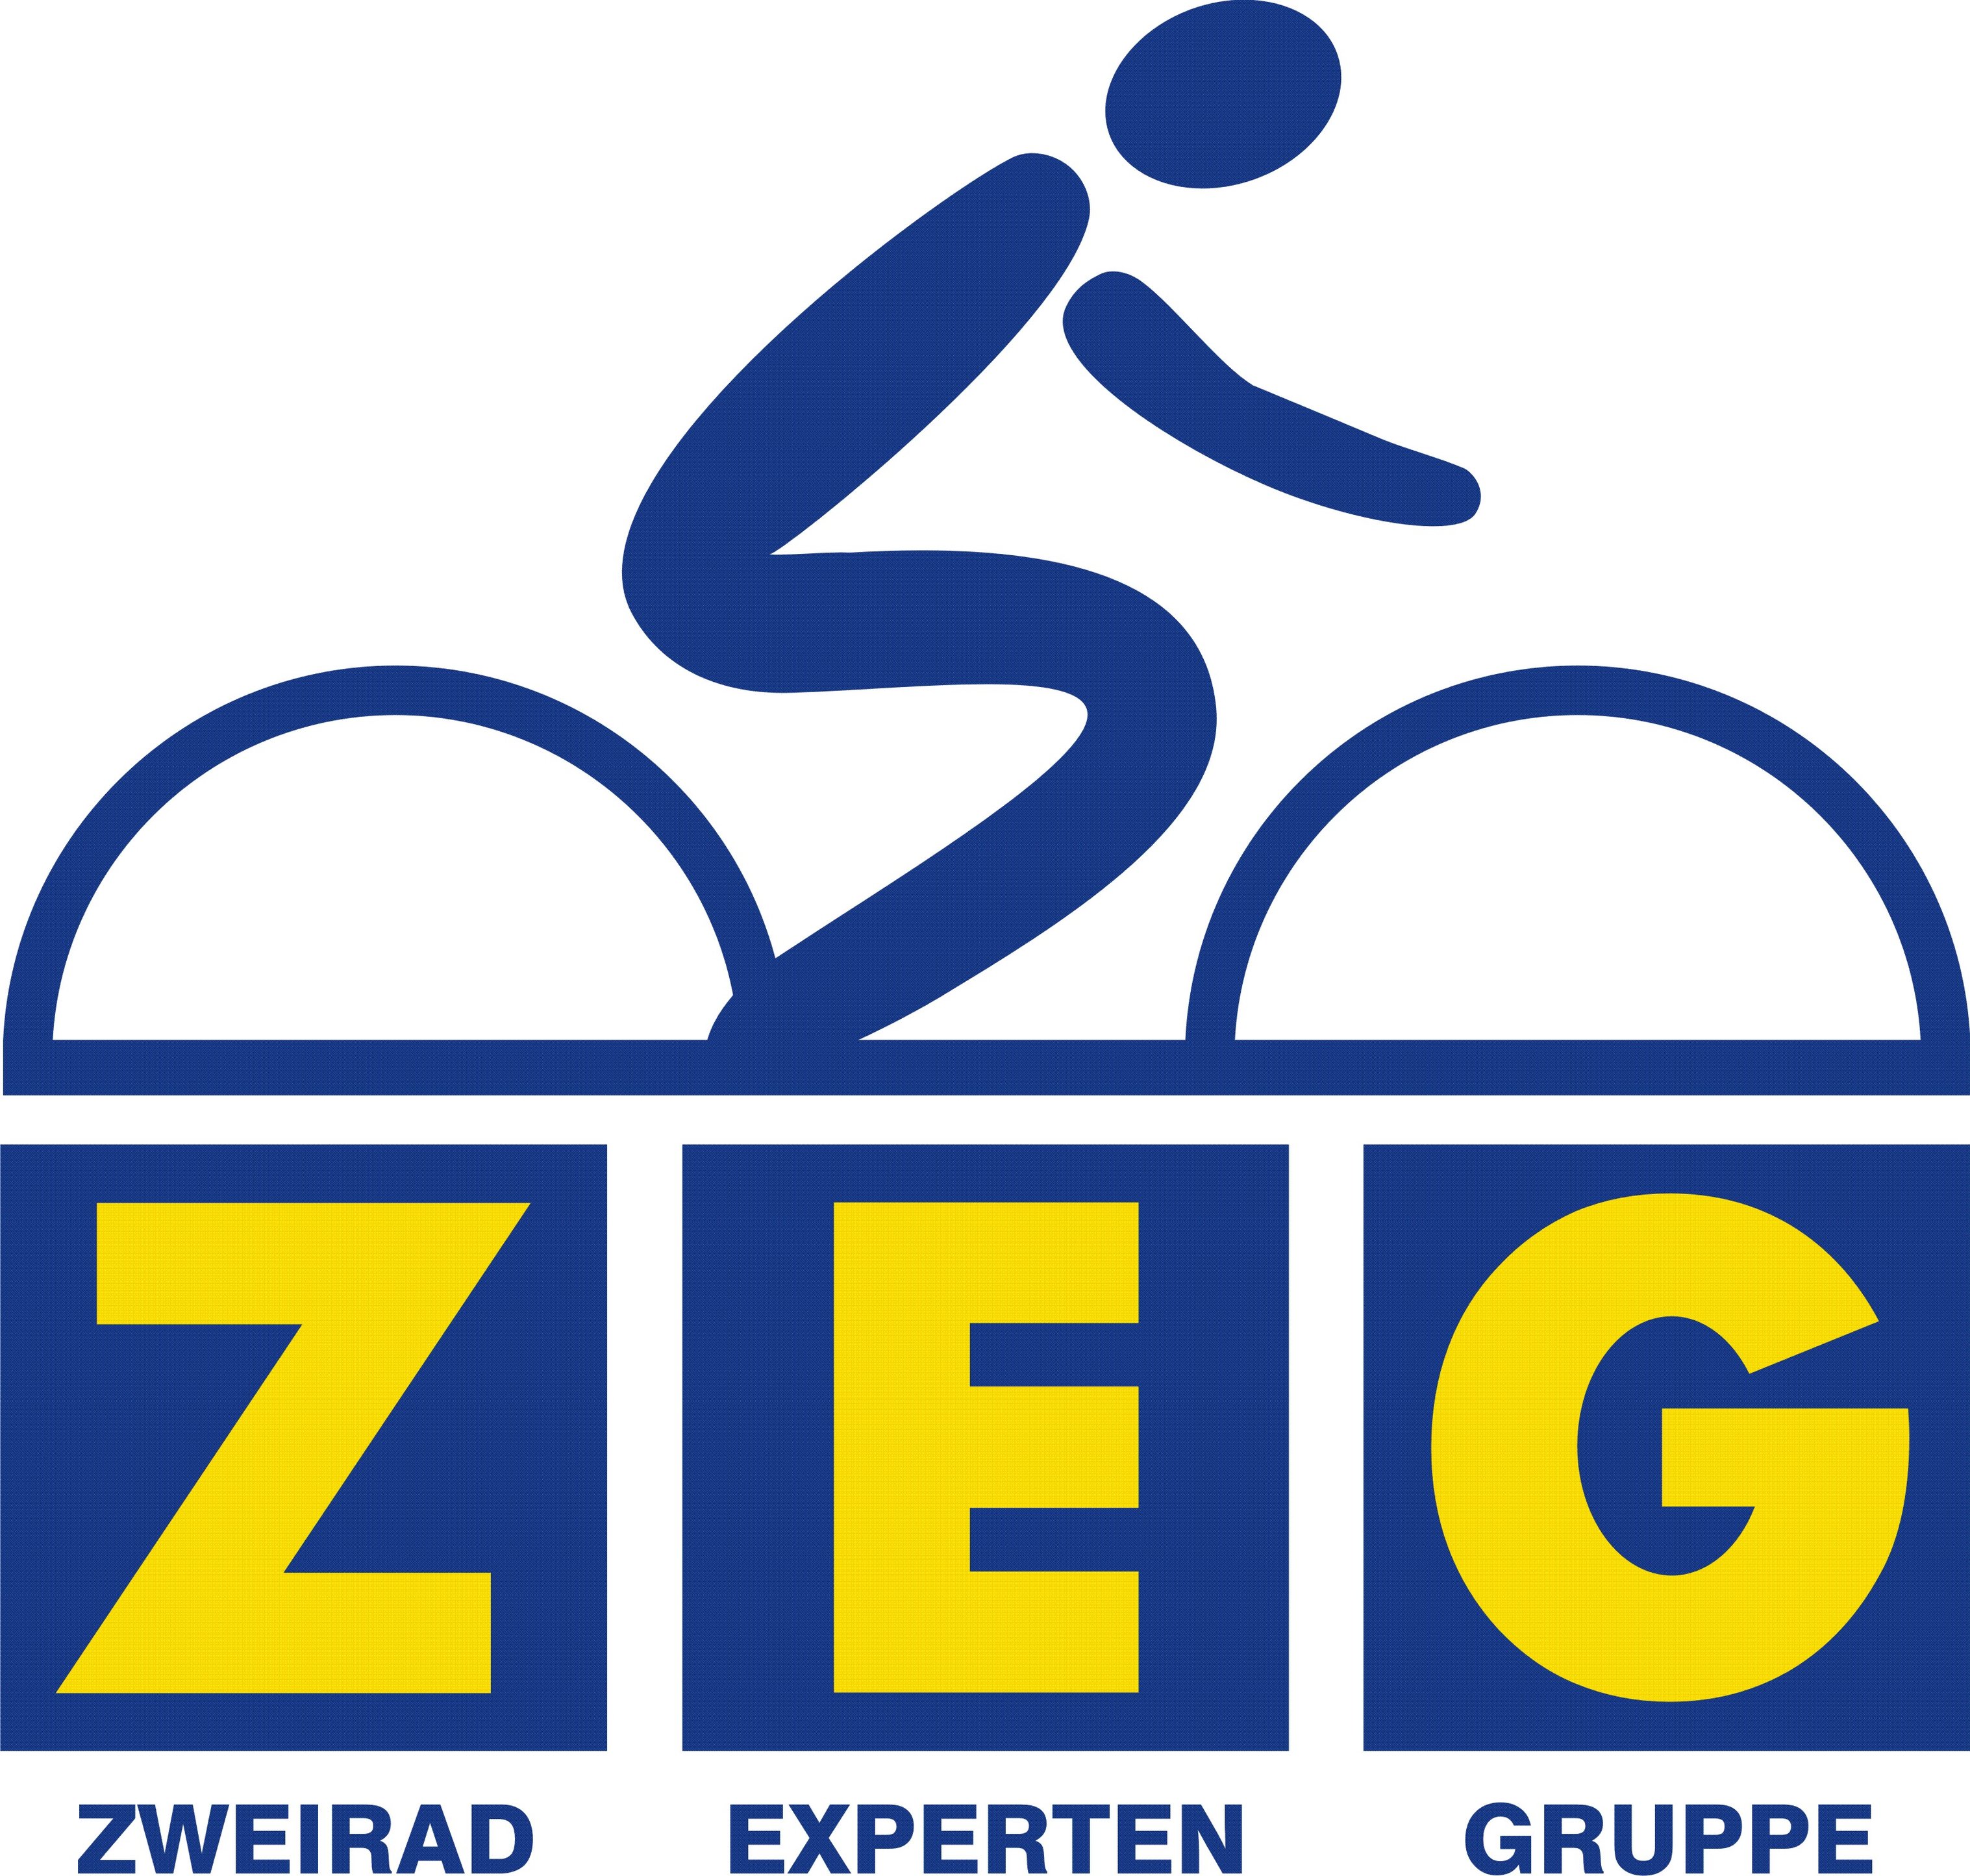 ZEG Logo